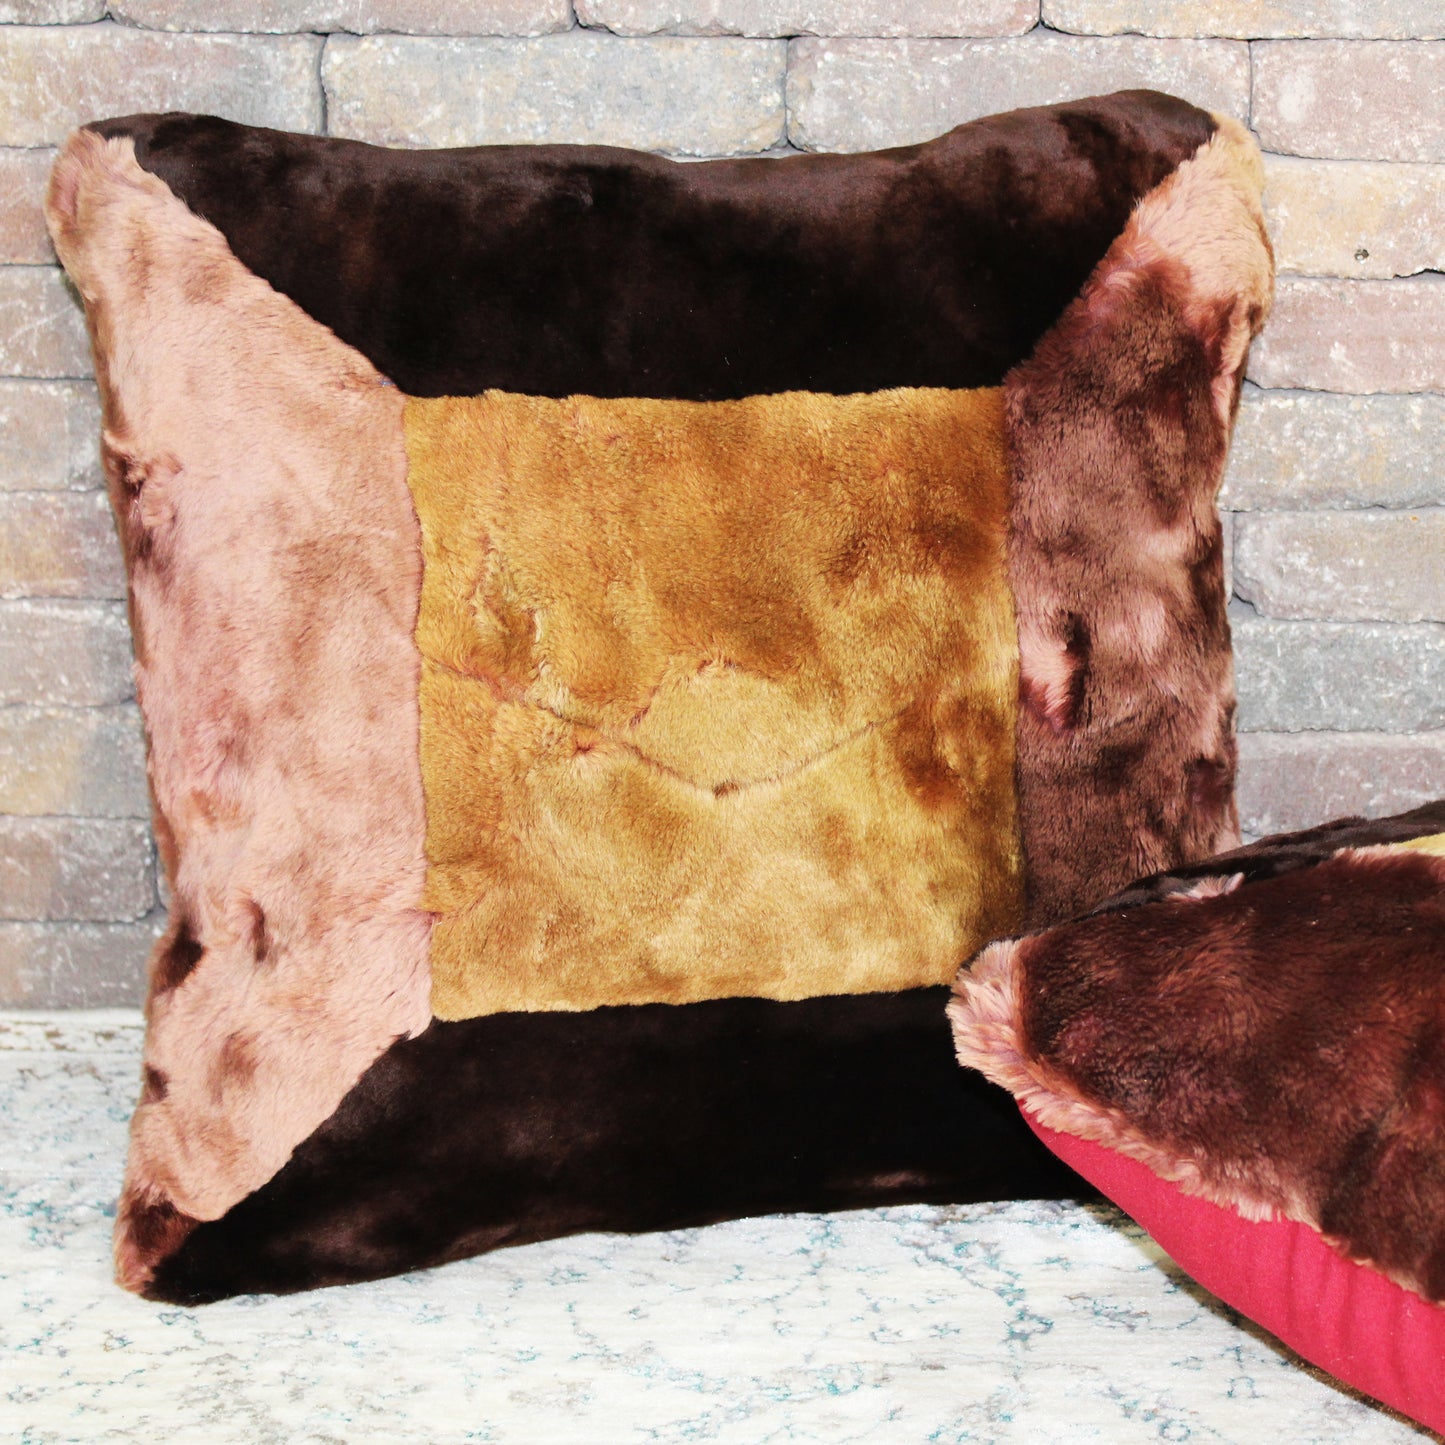 Natural Geo Flocculent Sheepskin Beige/Brown Square Decorative Throw Pillow